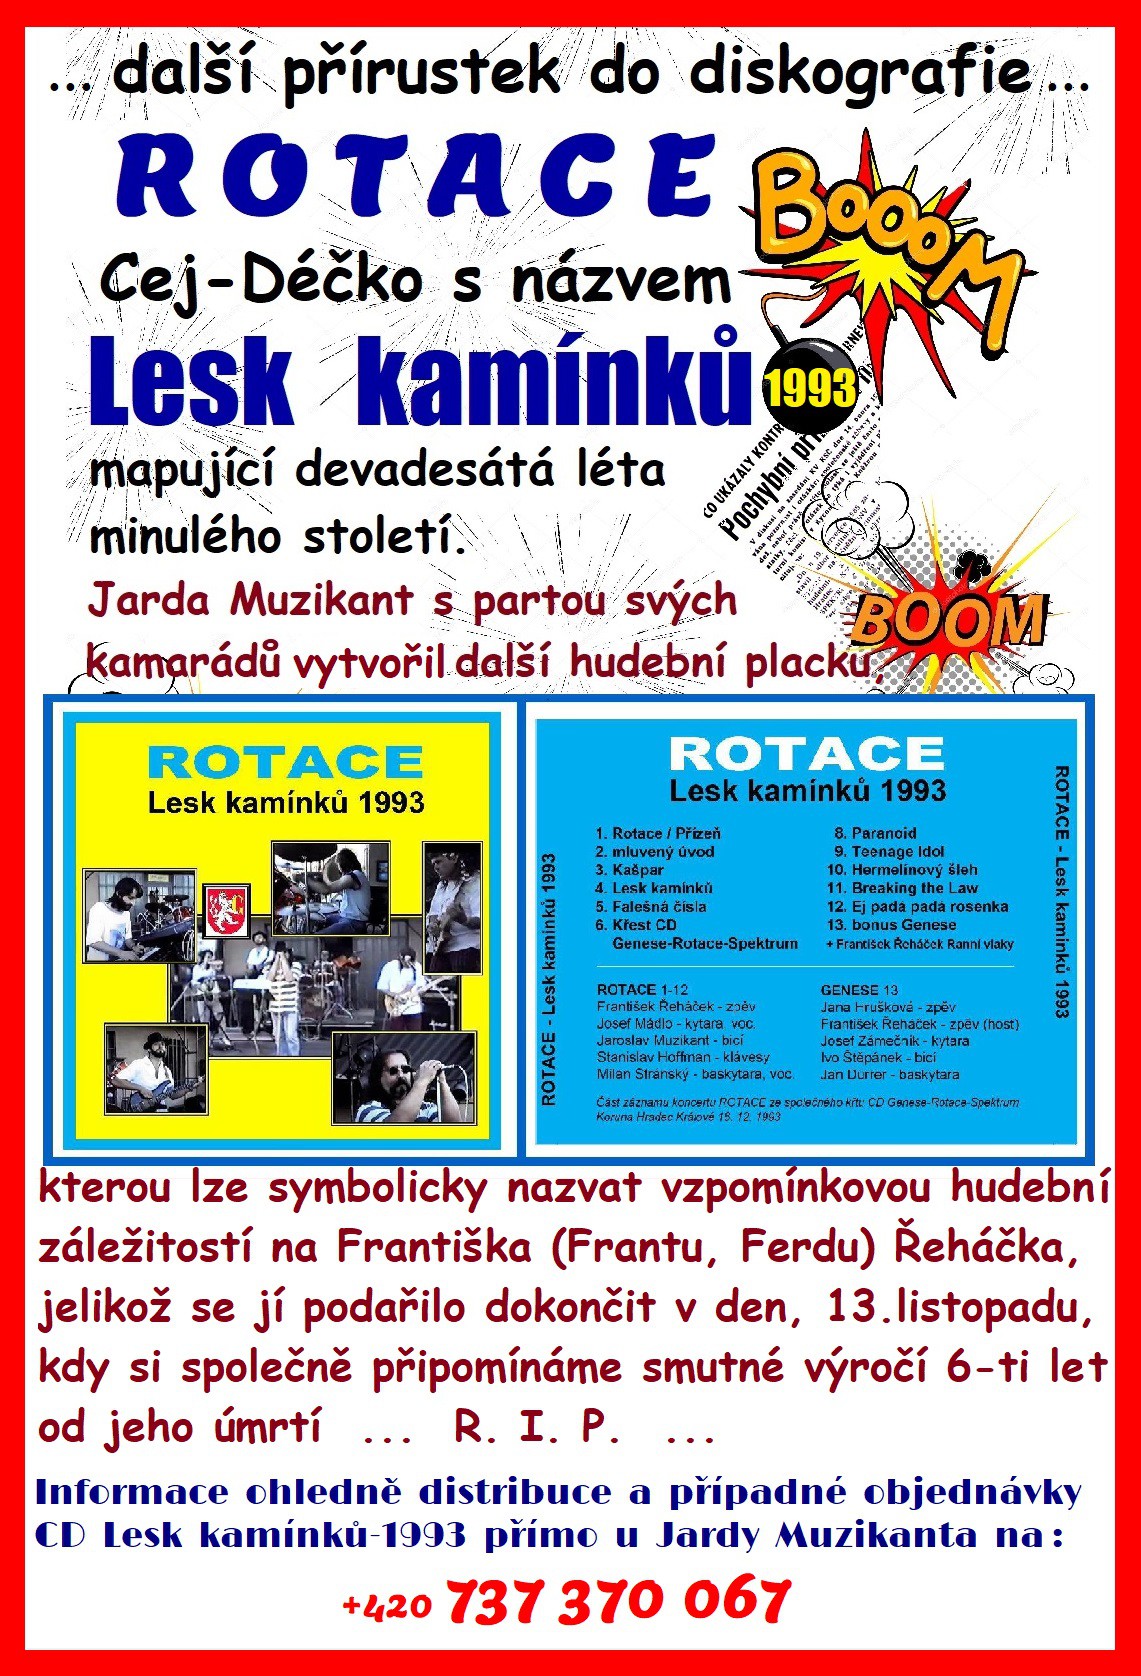 cd-lesk-kaminku-devadesata-leta.jpg